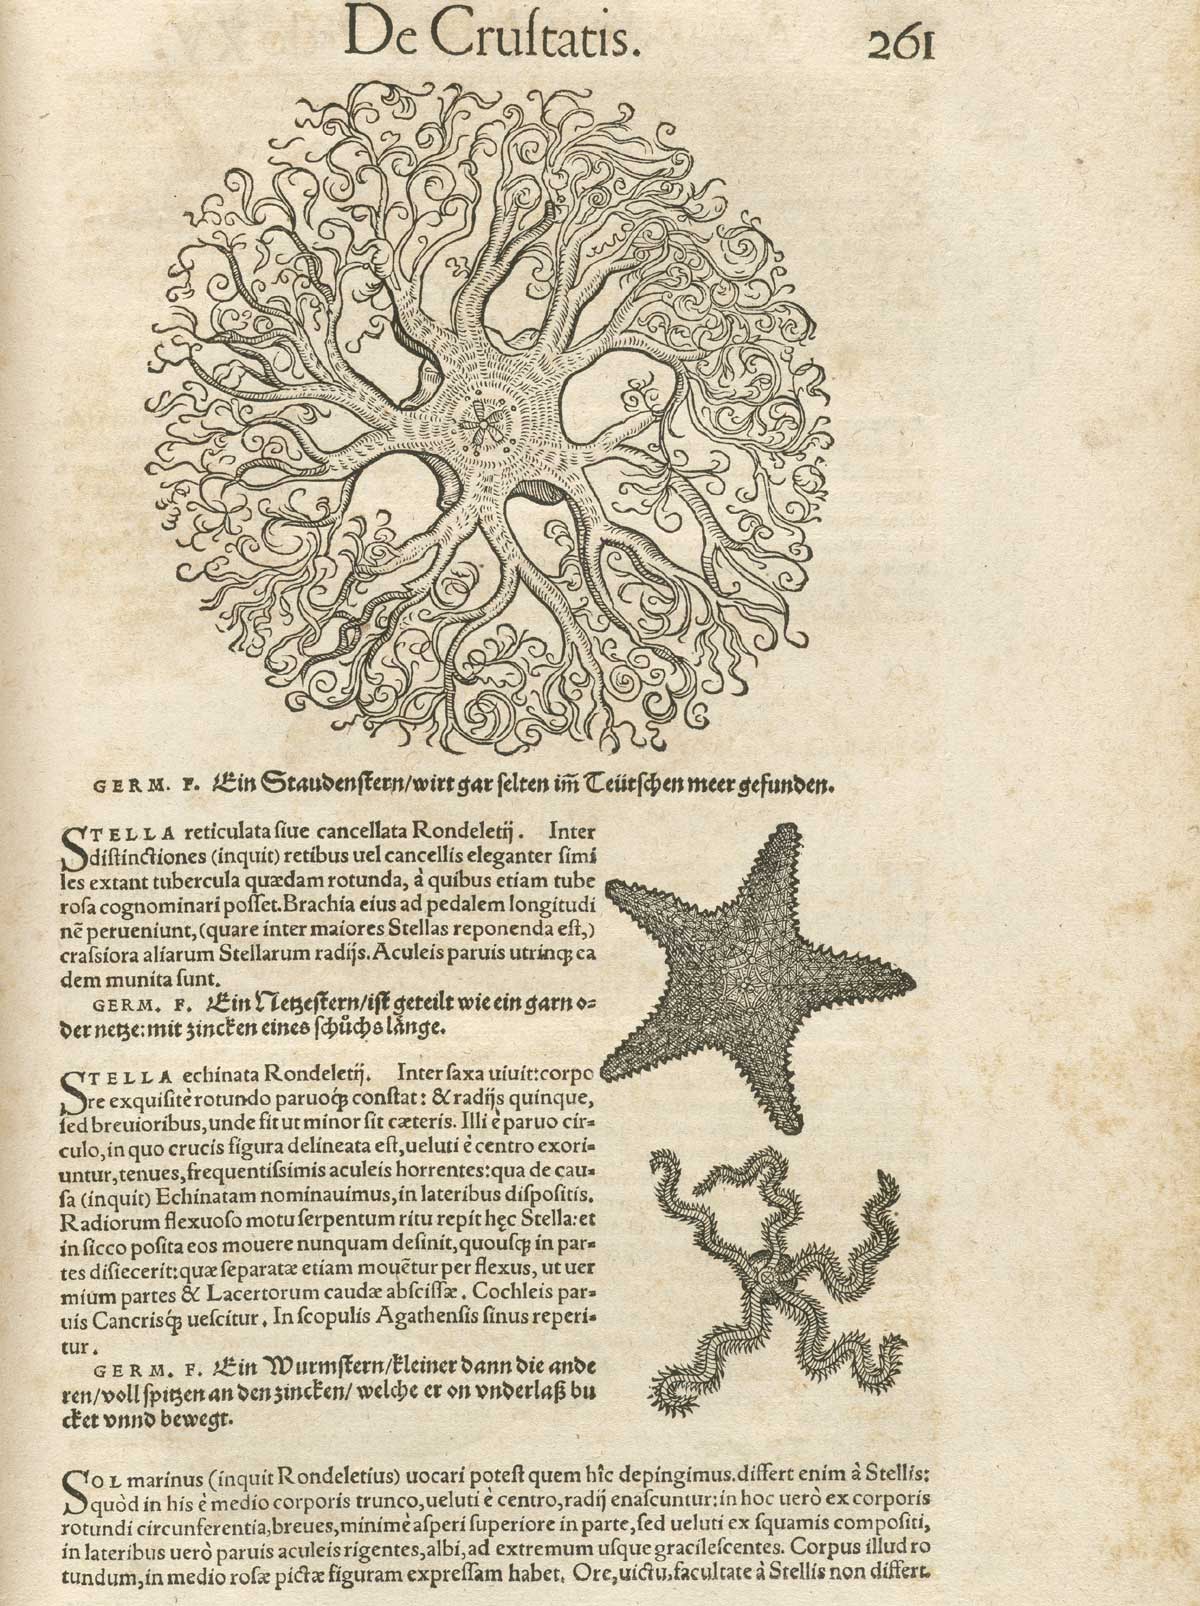 Page 261 from volume 4 of Conrad Gessner's Conradi Gesneri medici Tigurini Historiae animalium, featuring illustrations of three different starfish.